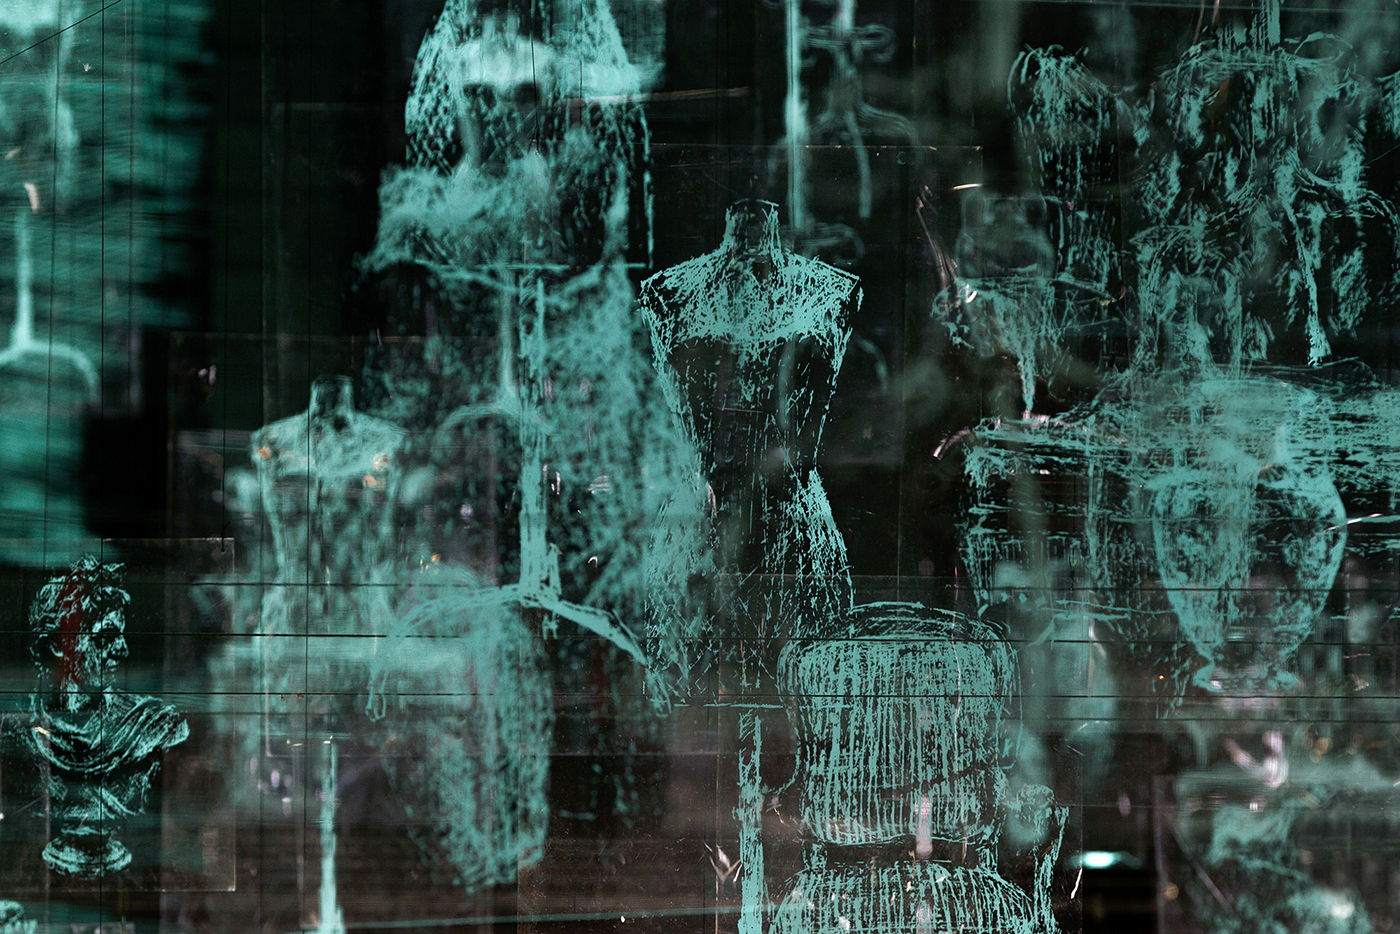 MATIÈRE NOIRE, exhibition by Gonzalo Borondo in Marseille, France Artes & contextos Matière Noire Borondo Untitled detail @ Blind Eye Factory